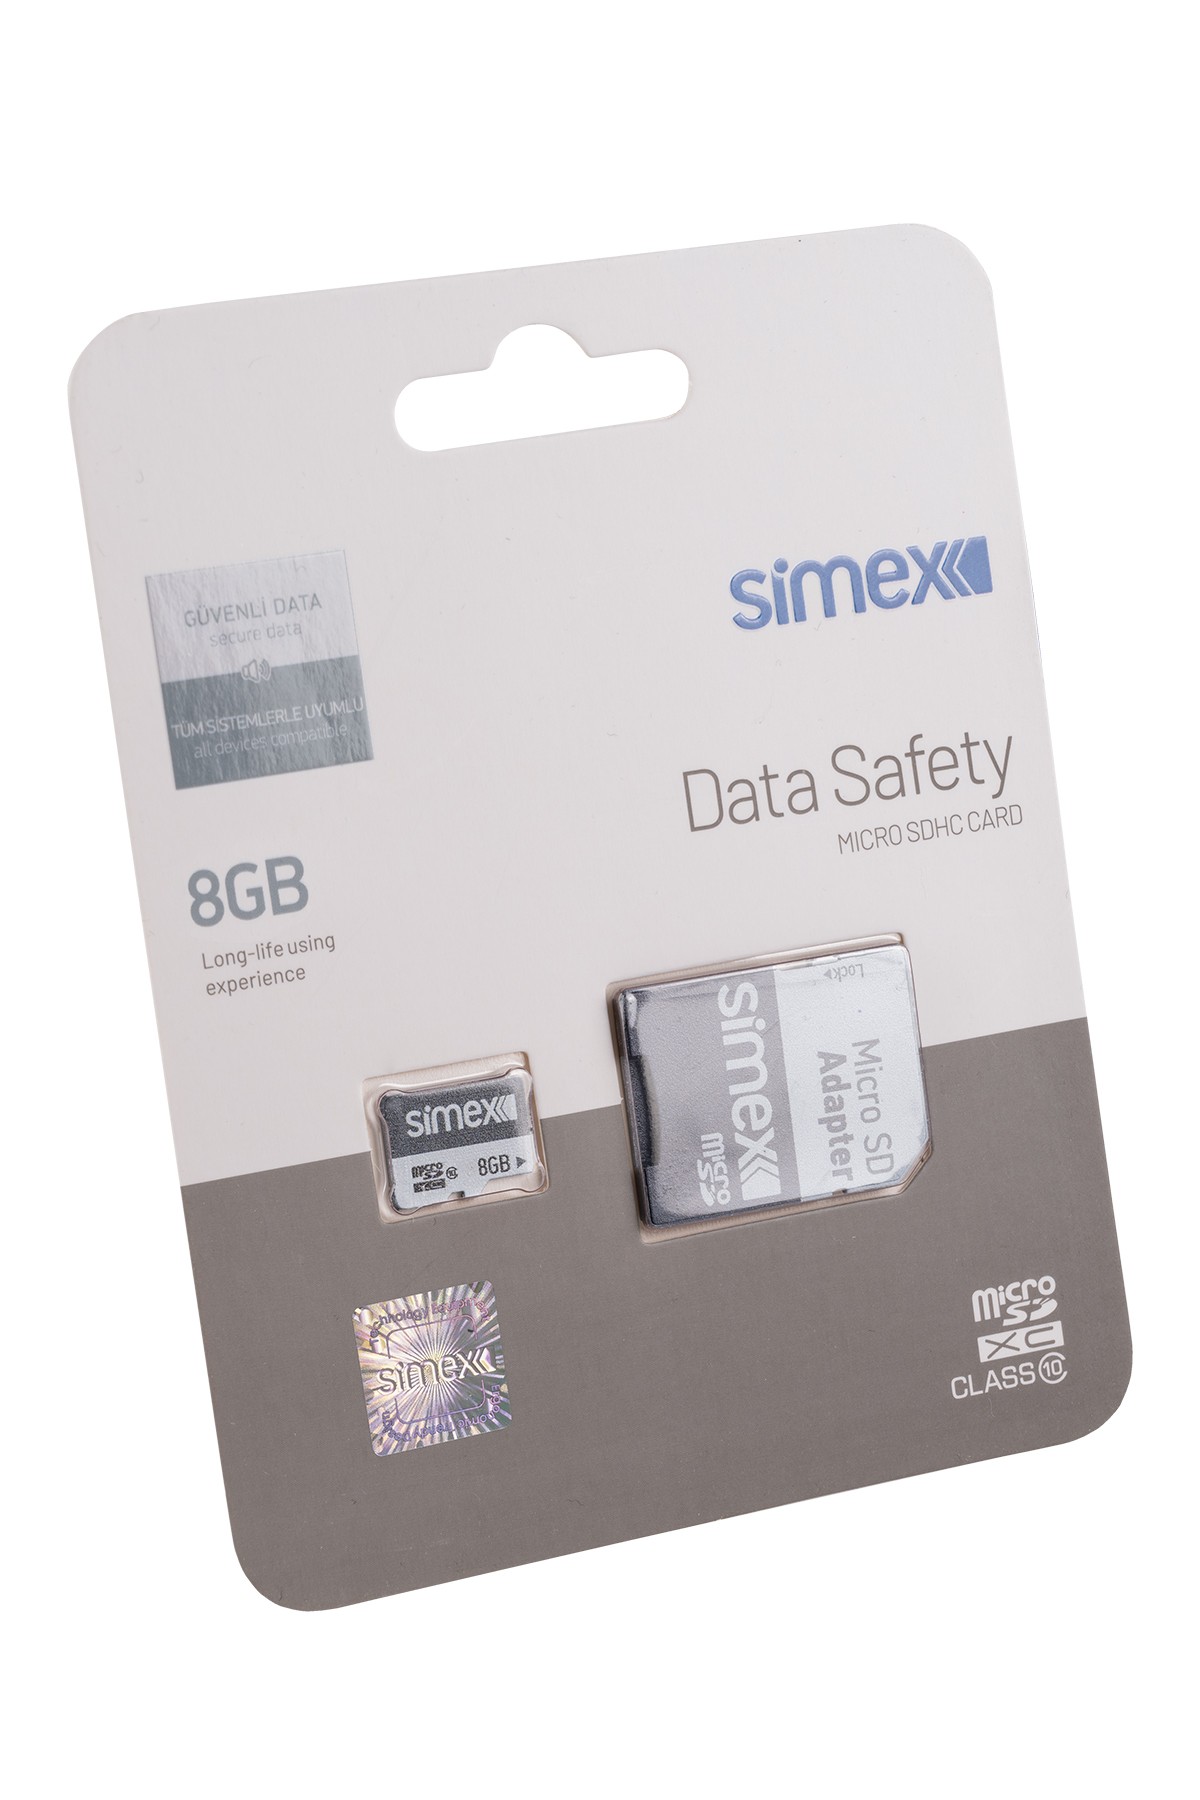 Simex SH-101 Data Safety Micro SD 8GB Hafıza Kartı